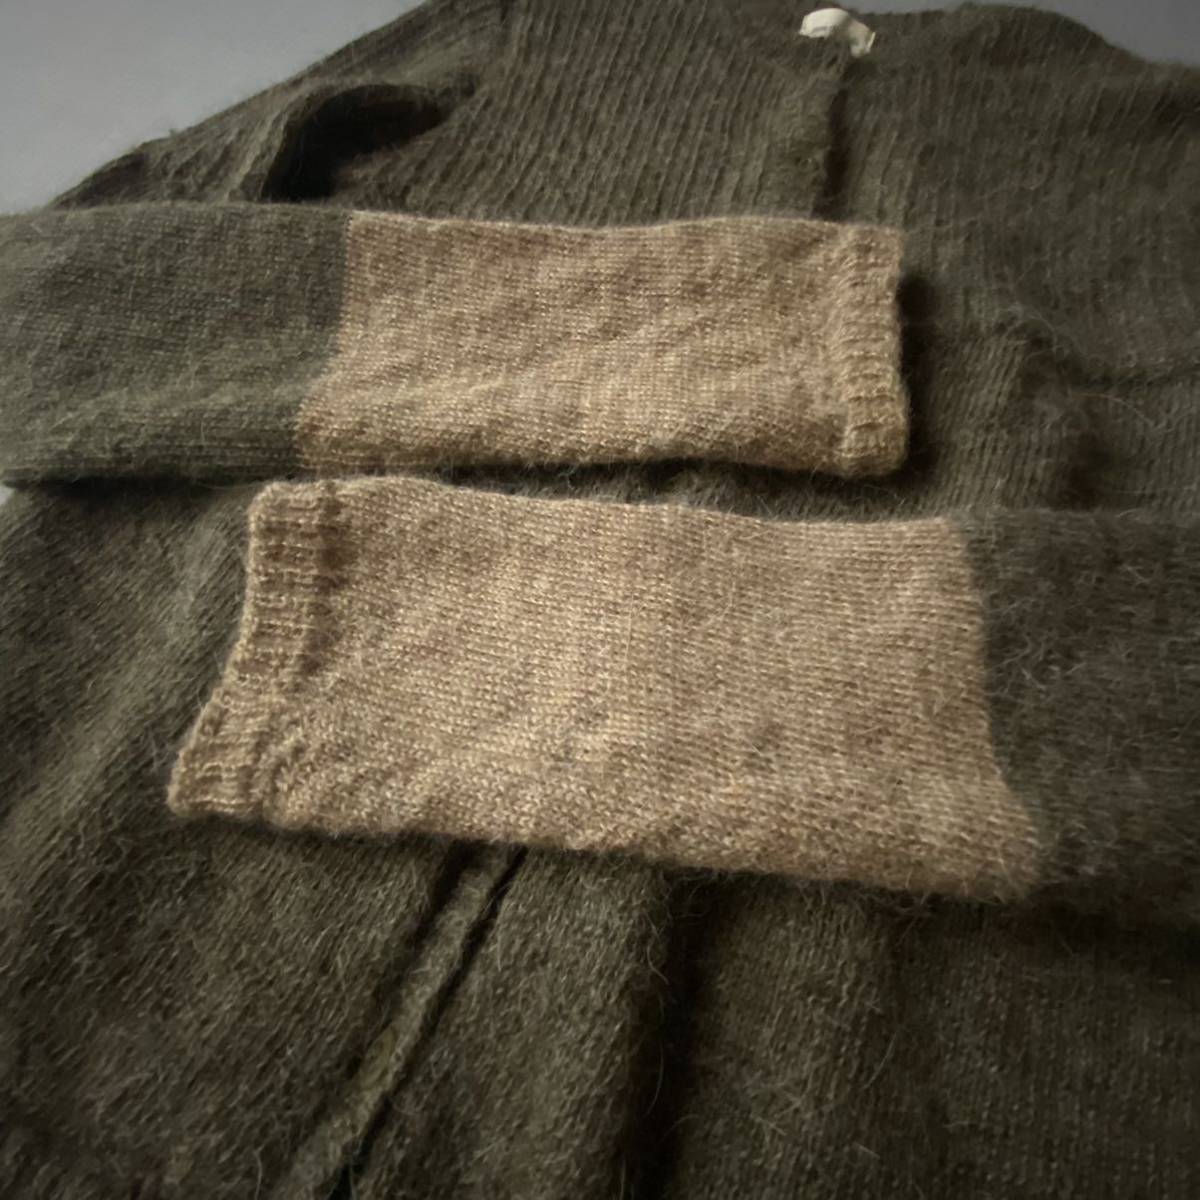 pas de calais кардиган pas de calais женский шерсть свитер альпака шерсть оливковый цвет .. цвет tops 